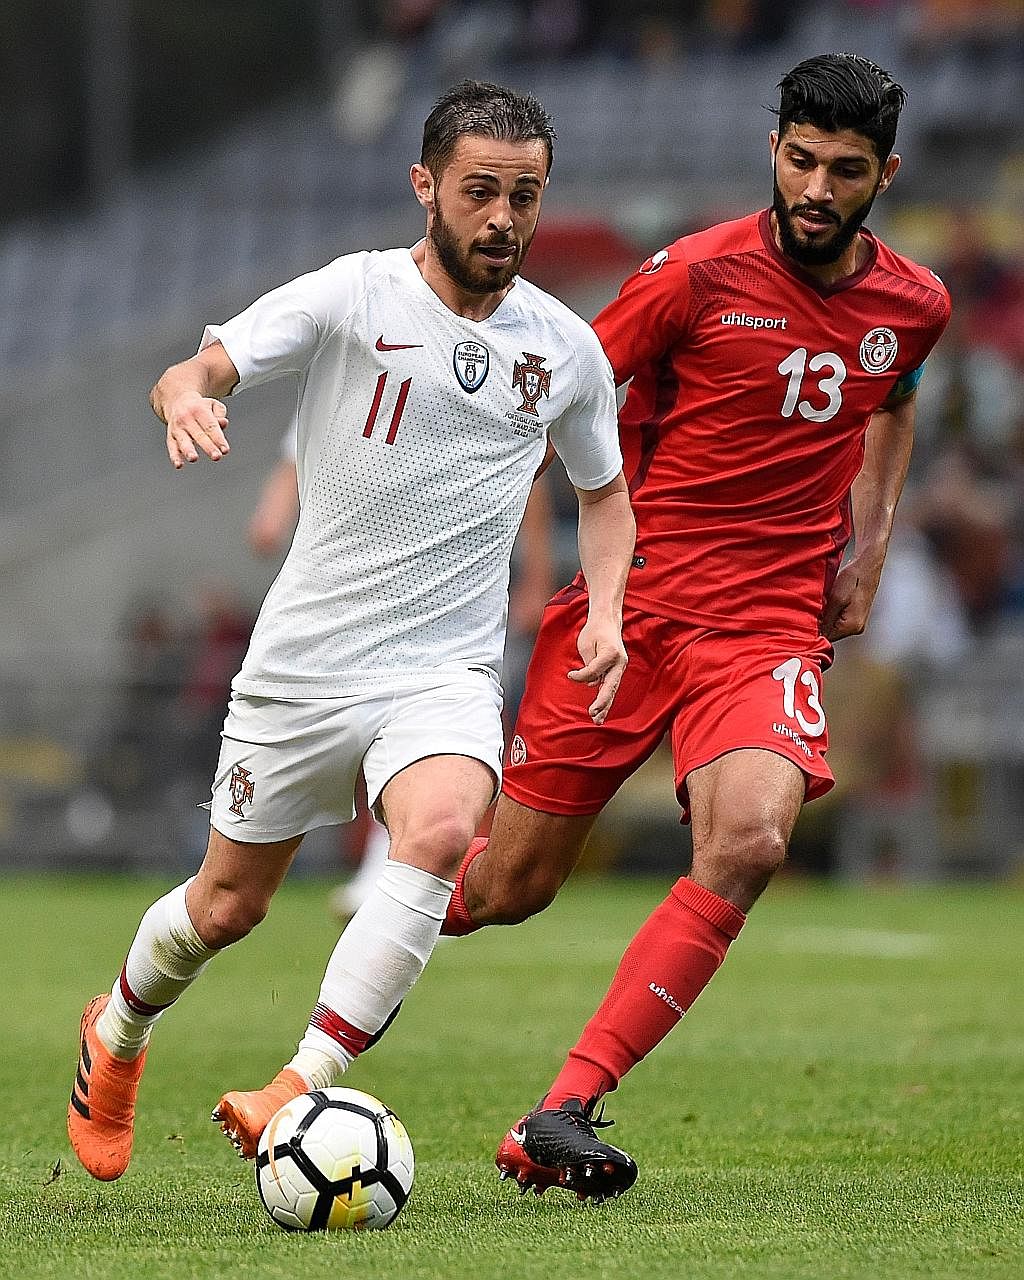 Portugal forward Bernardo Silva (left) being challenged by Tunisia midfielder Ferjani Sassi in their friendly match on Monday.